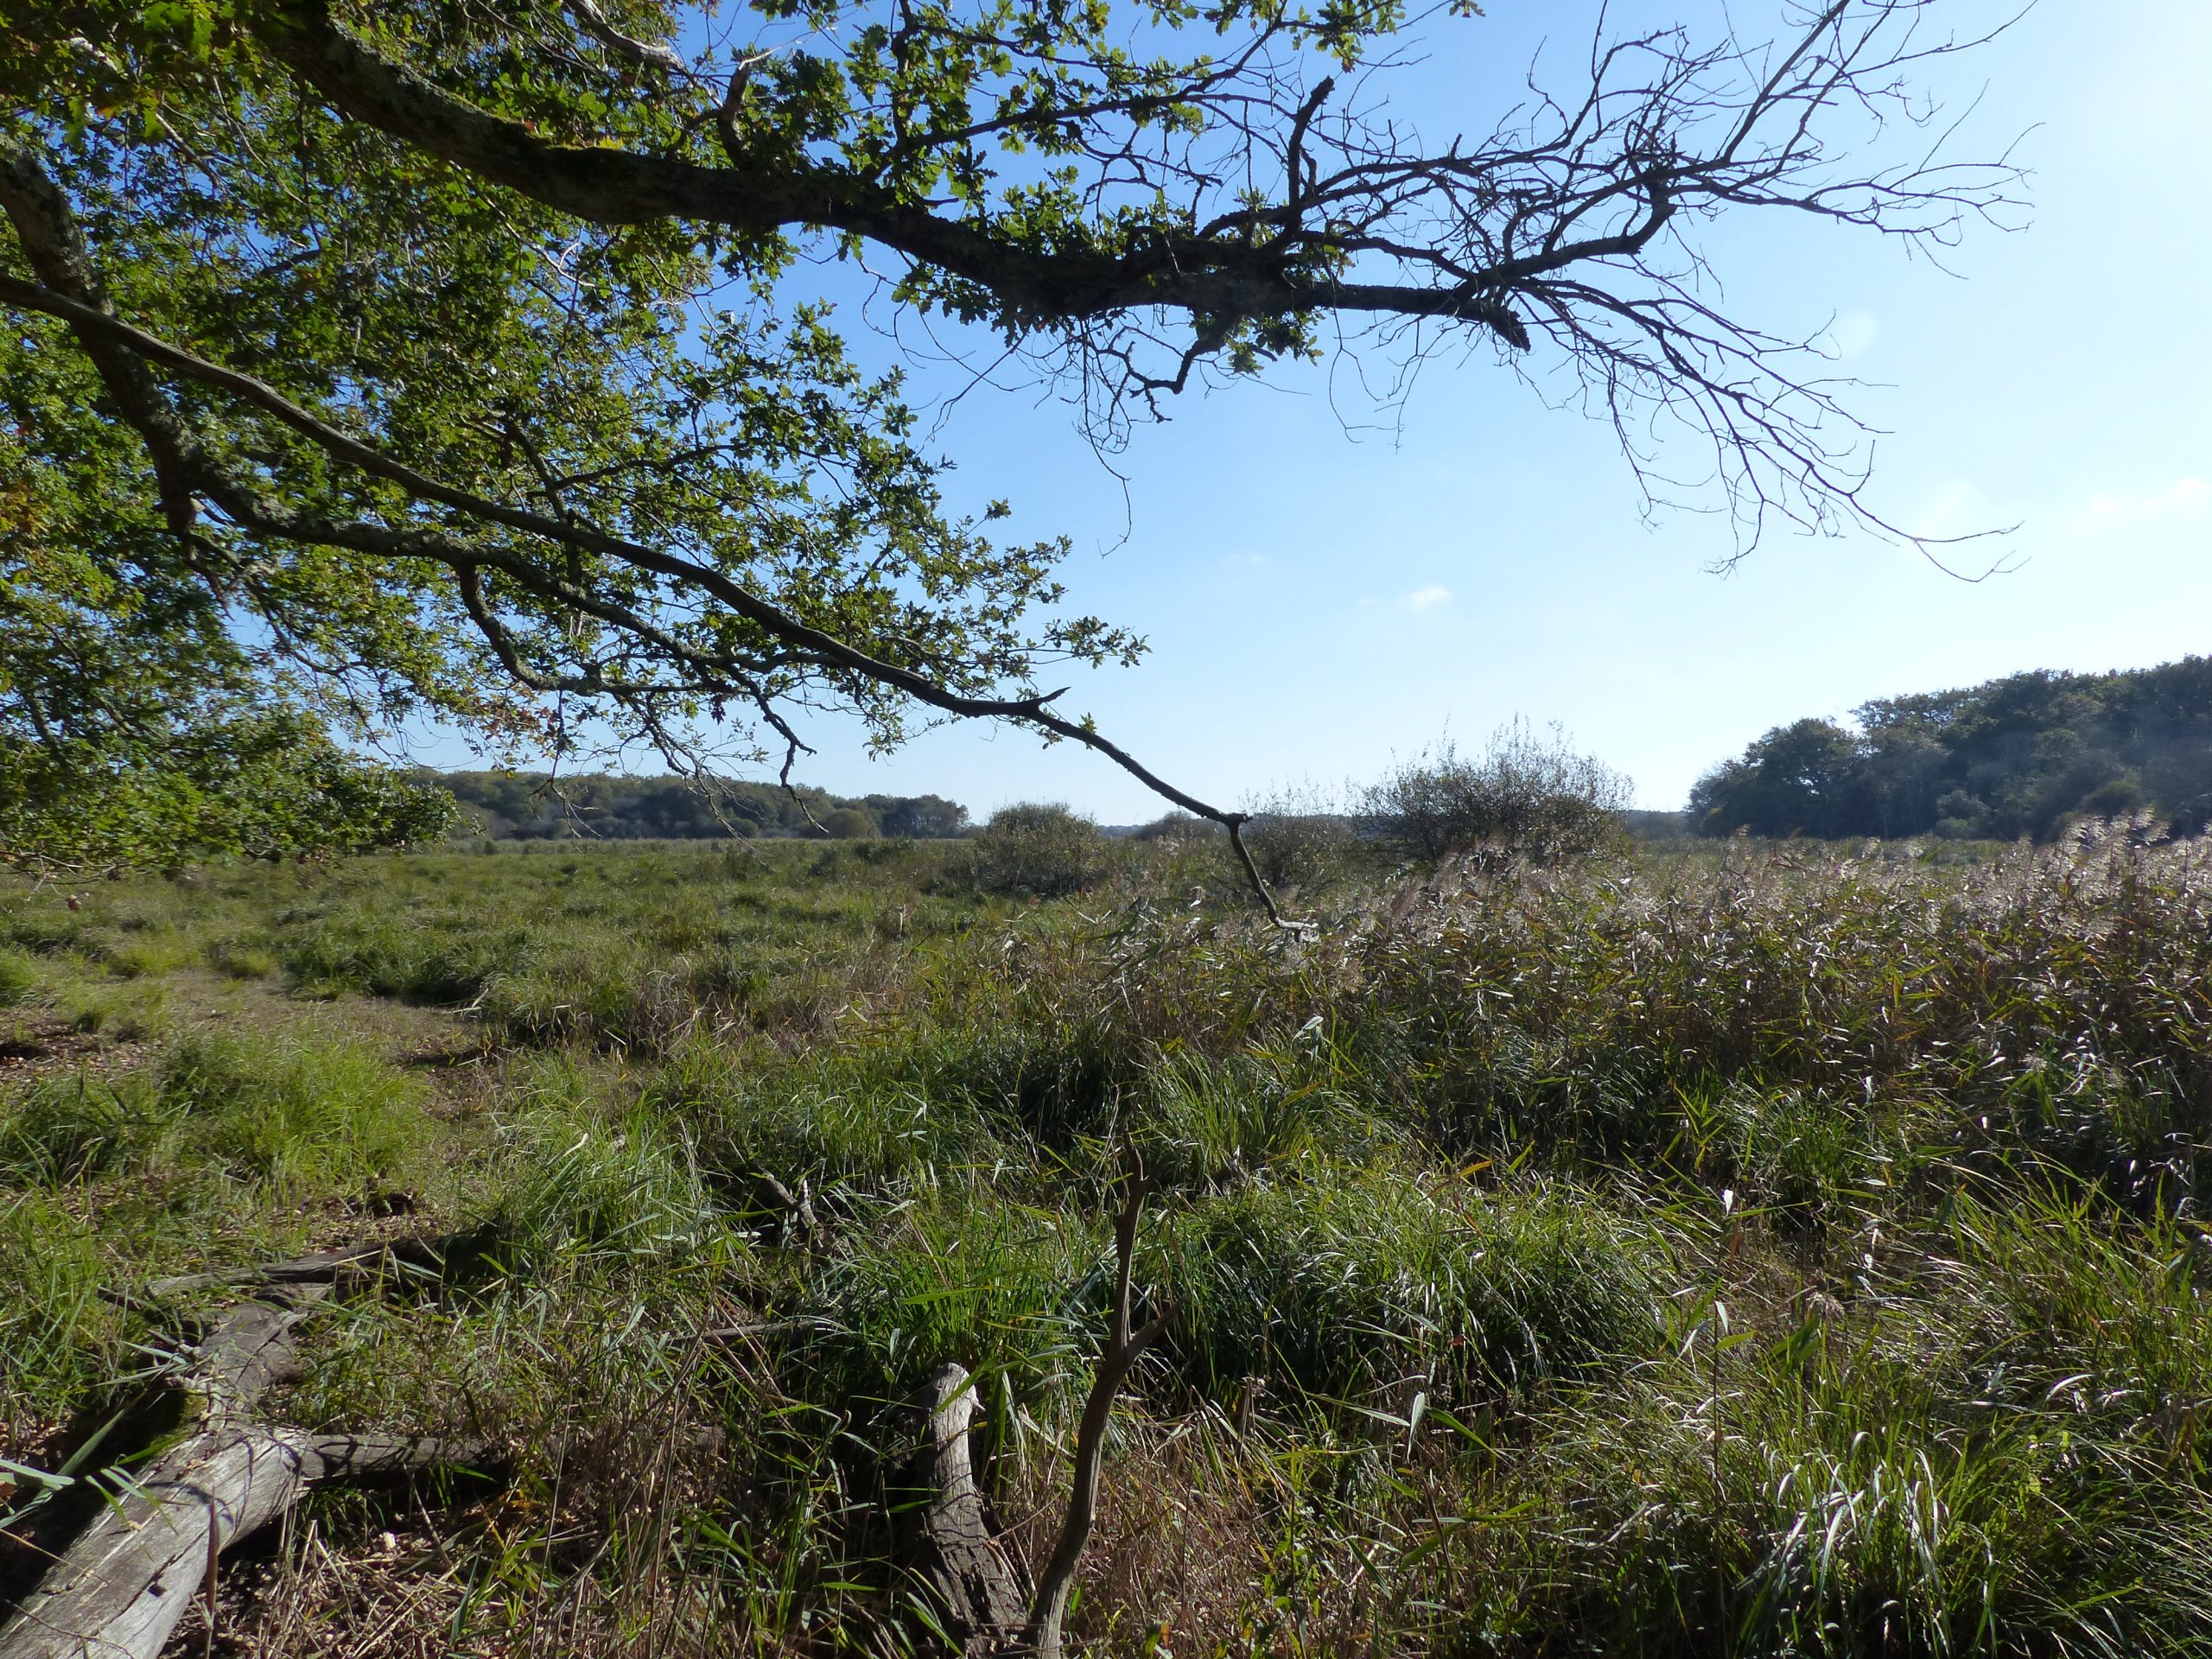 The Gua marsh trail